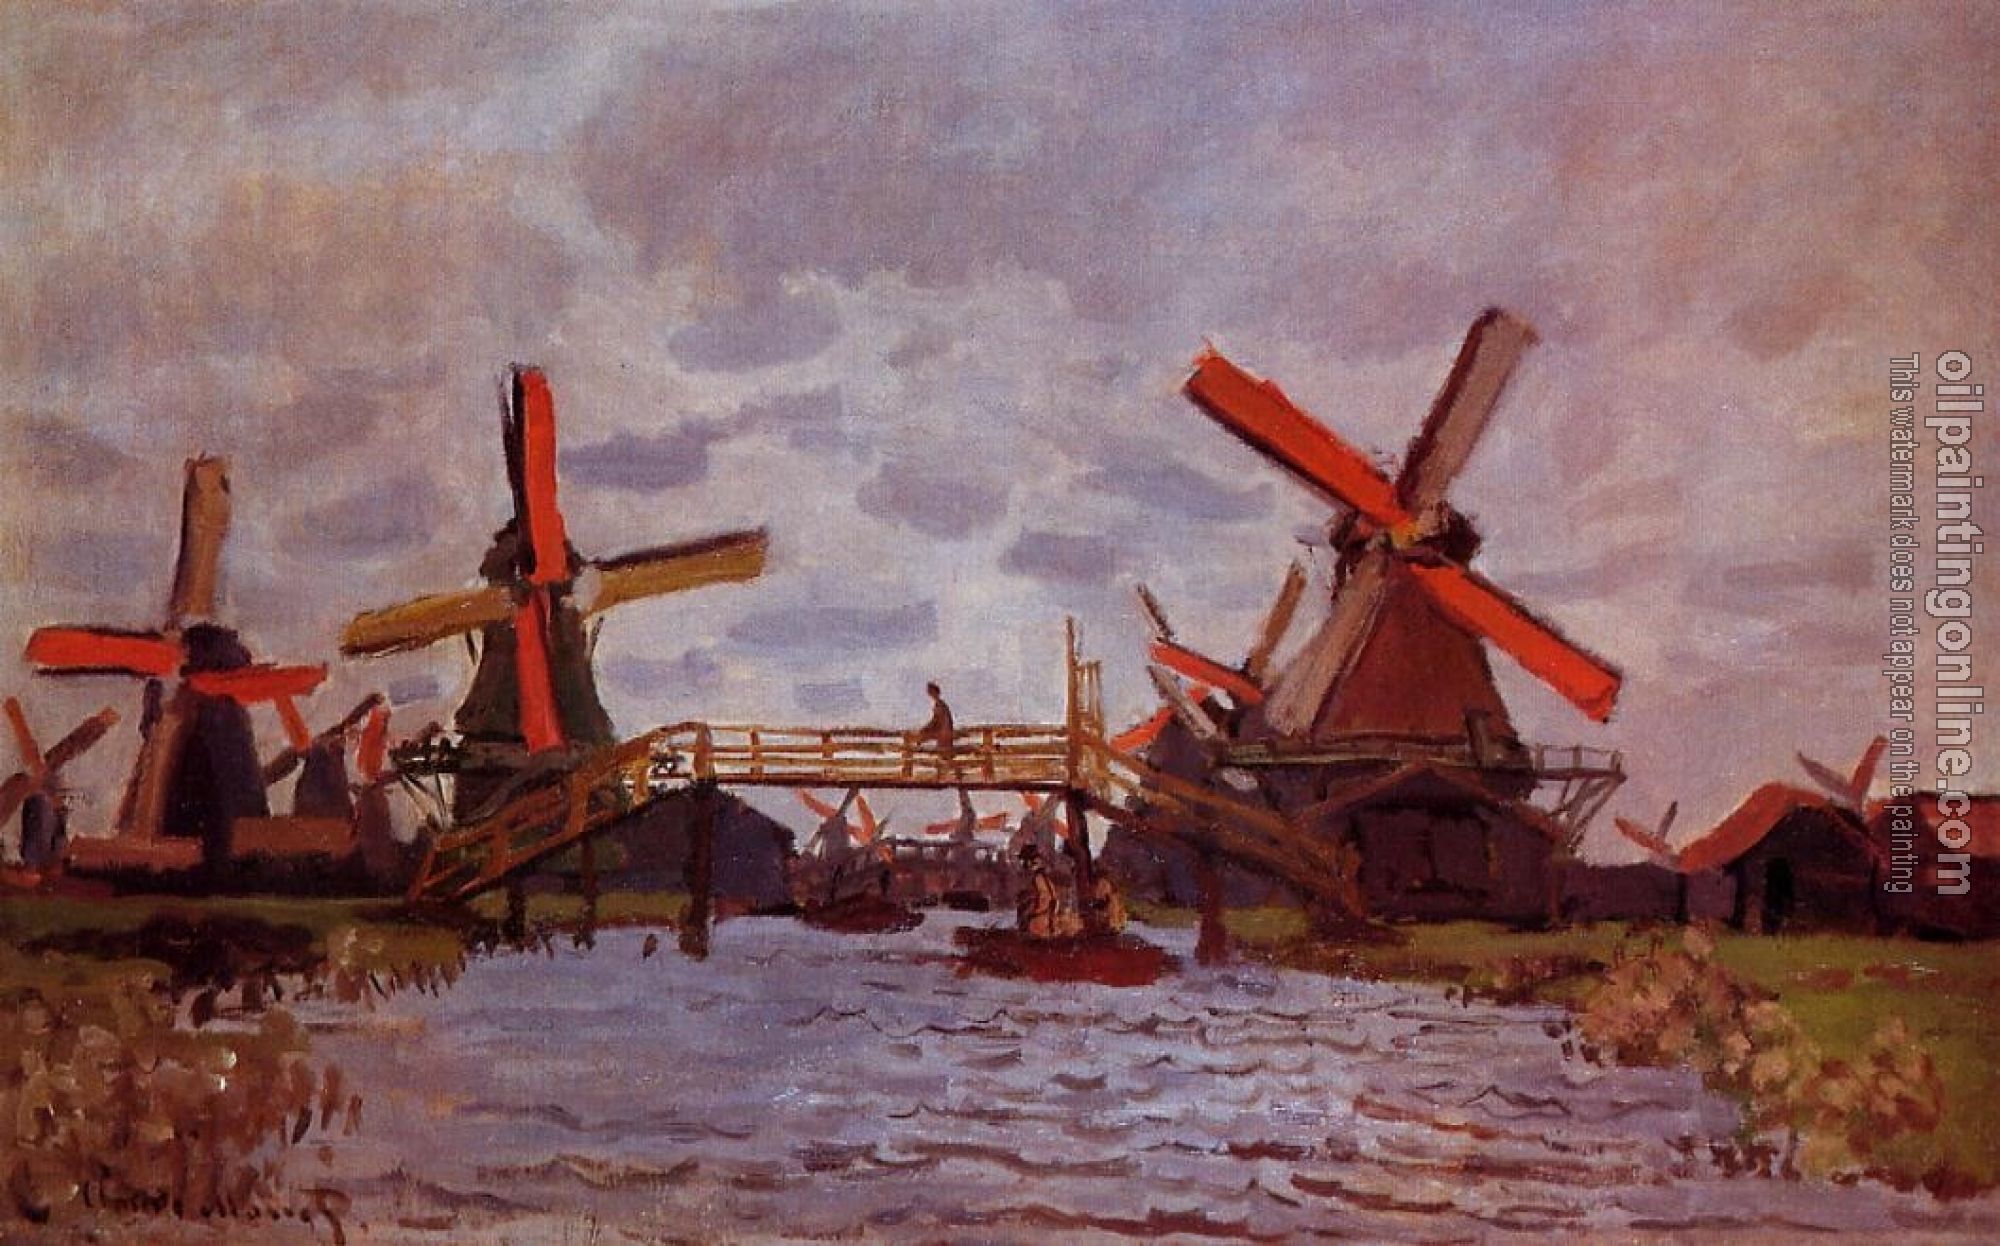 Monet, Claude Oscar - Windmills near Zaandam